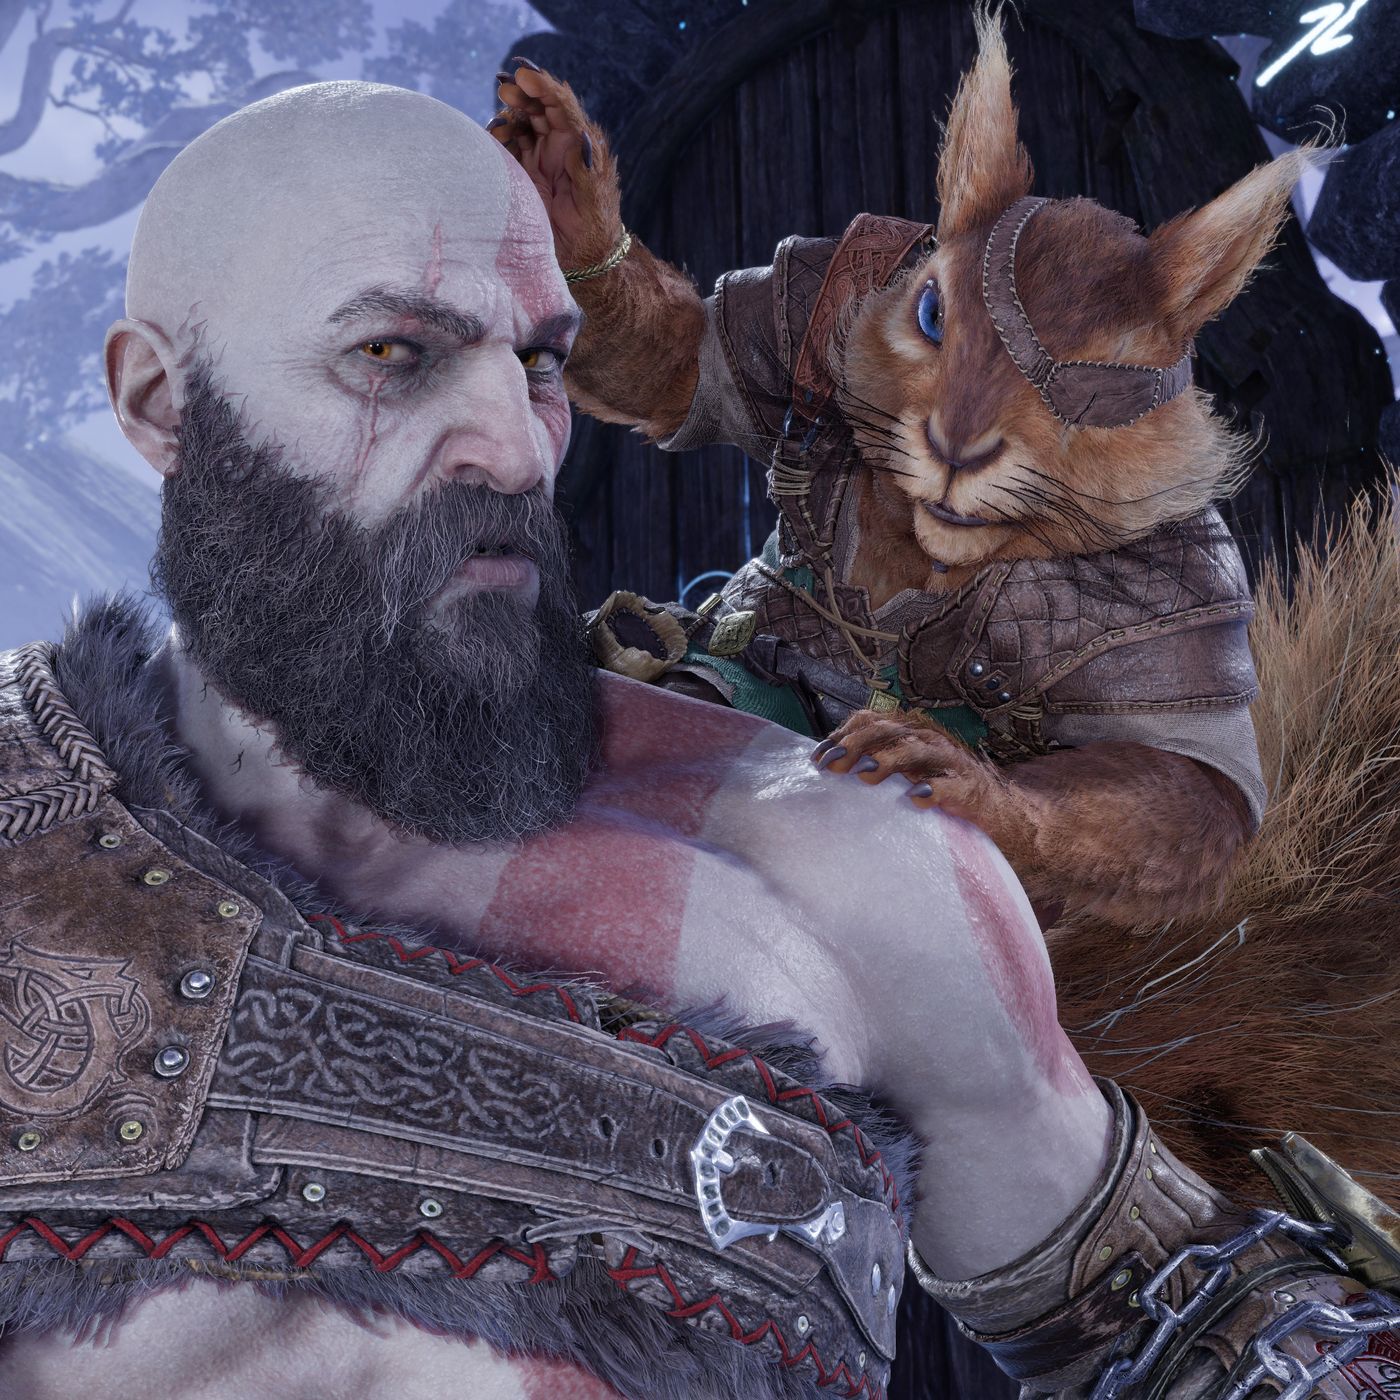 God of War: Ragnarök Brings Epic Franchise to the PS5, Video Games